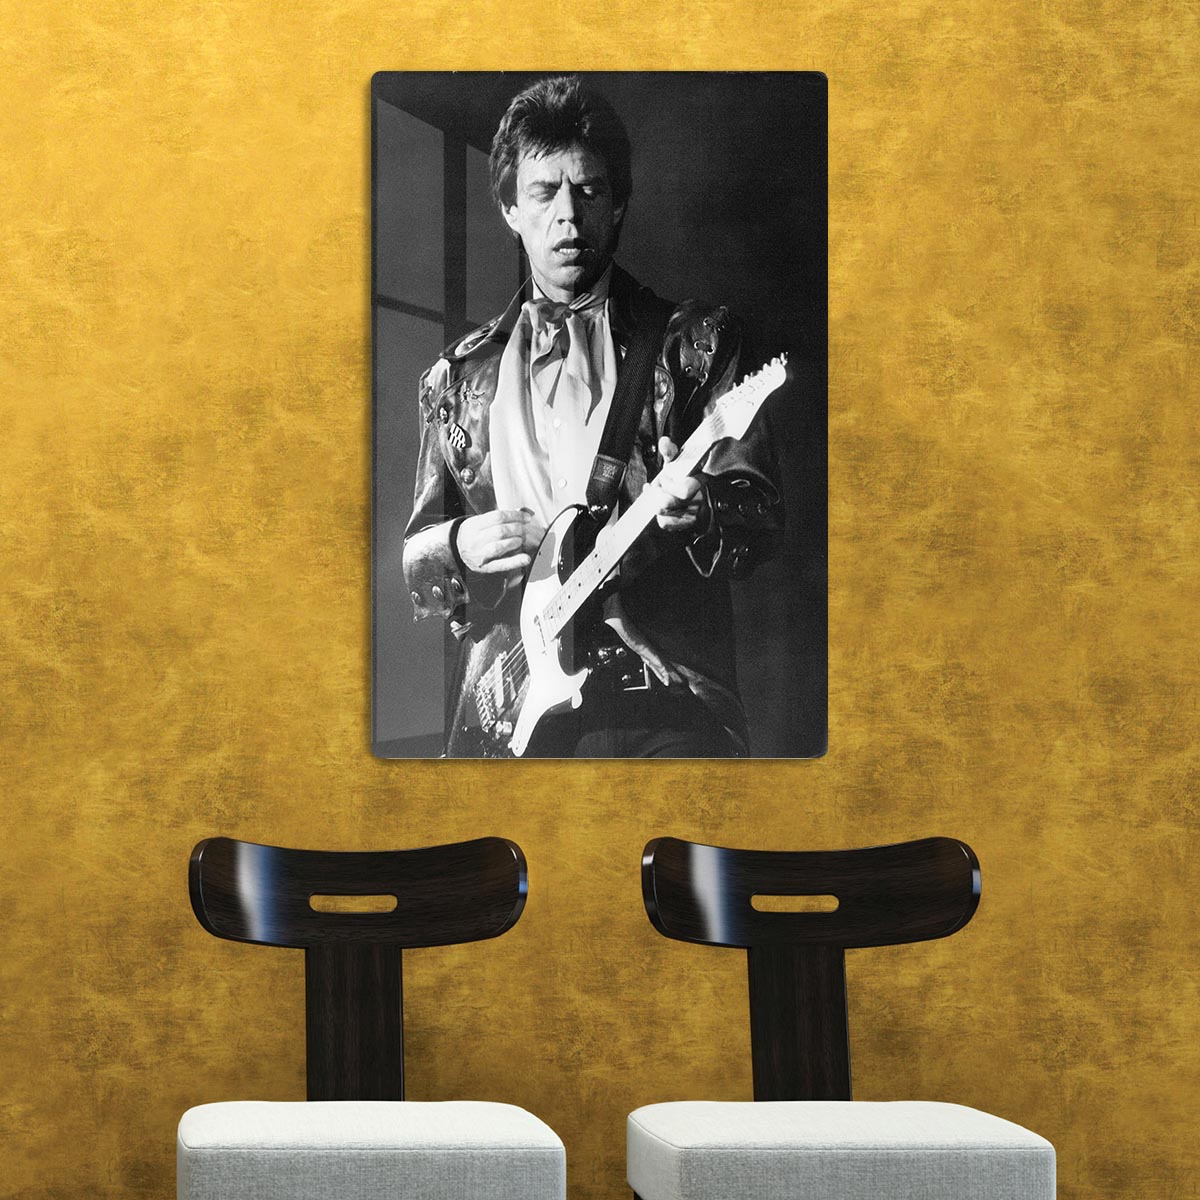 Mick Jagger on guitar HD Metal Print